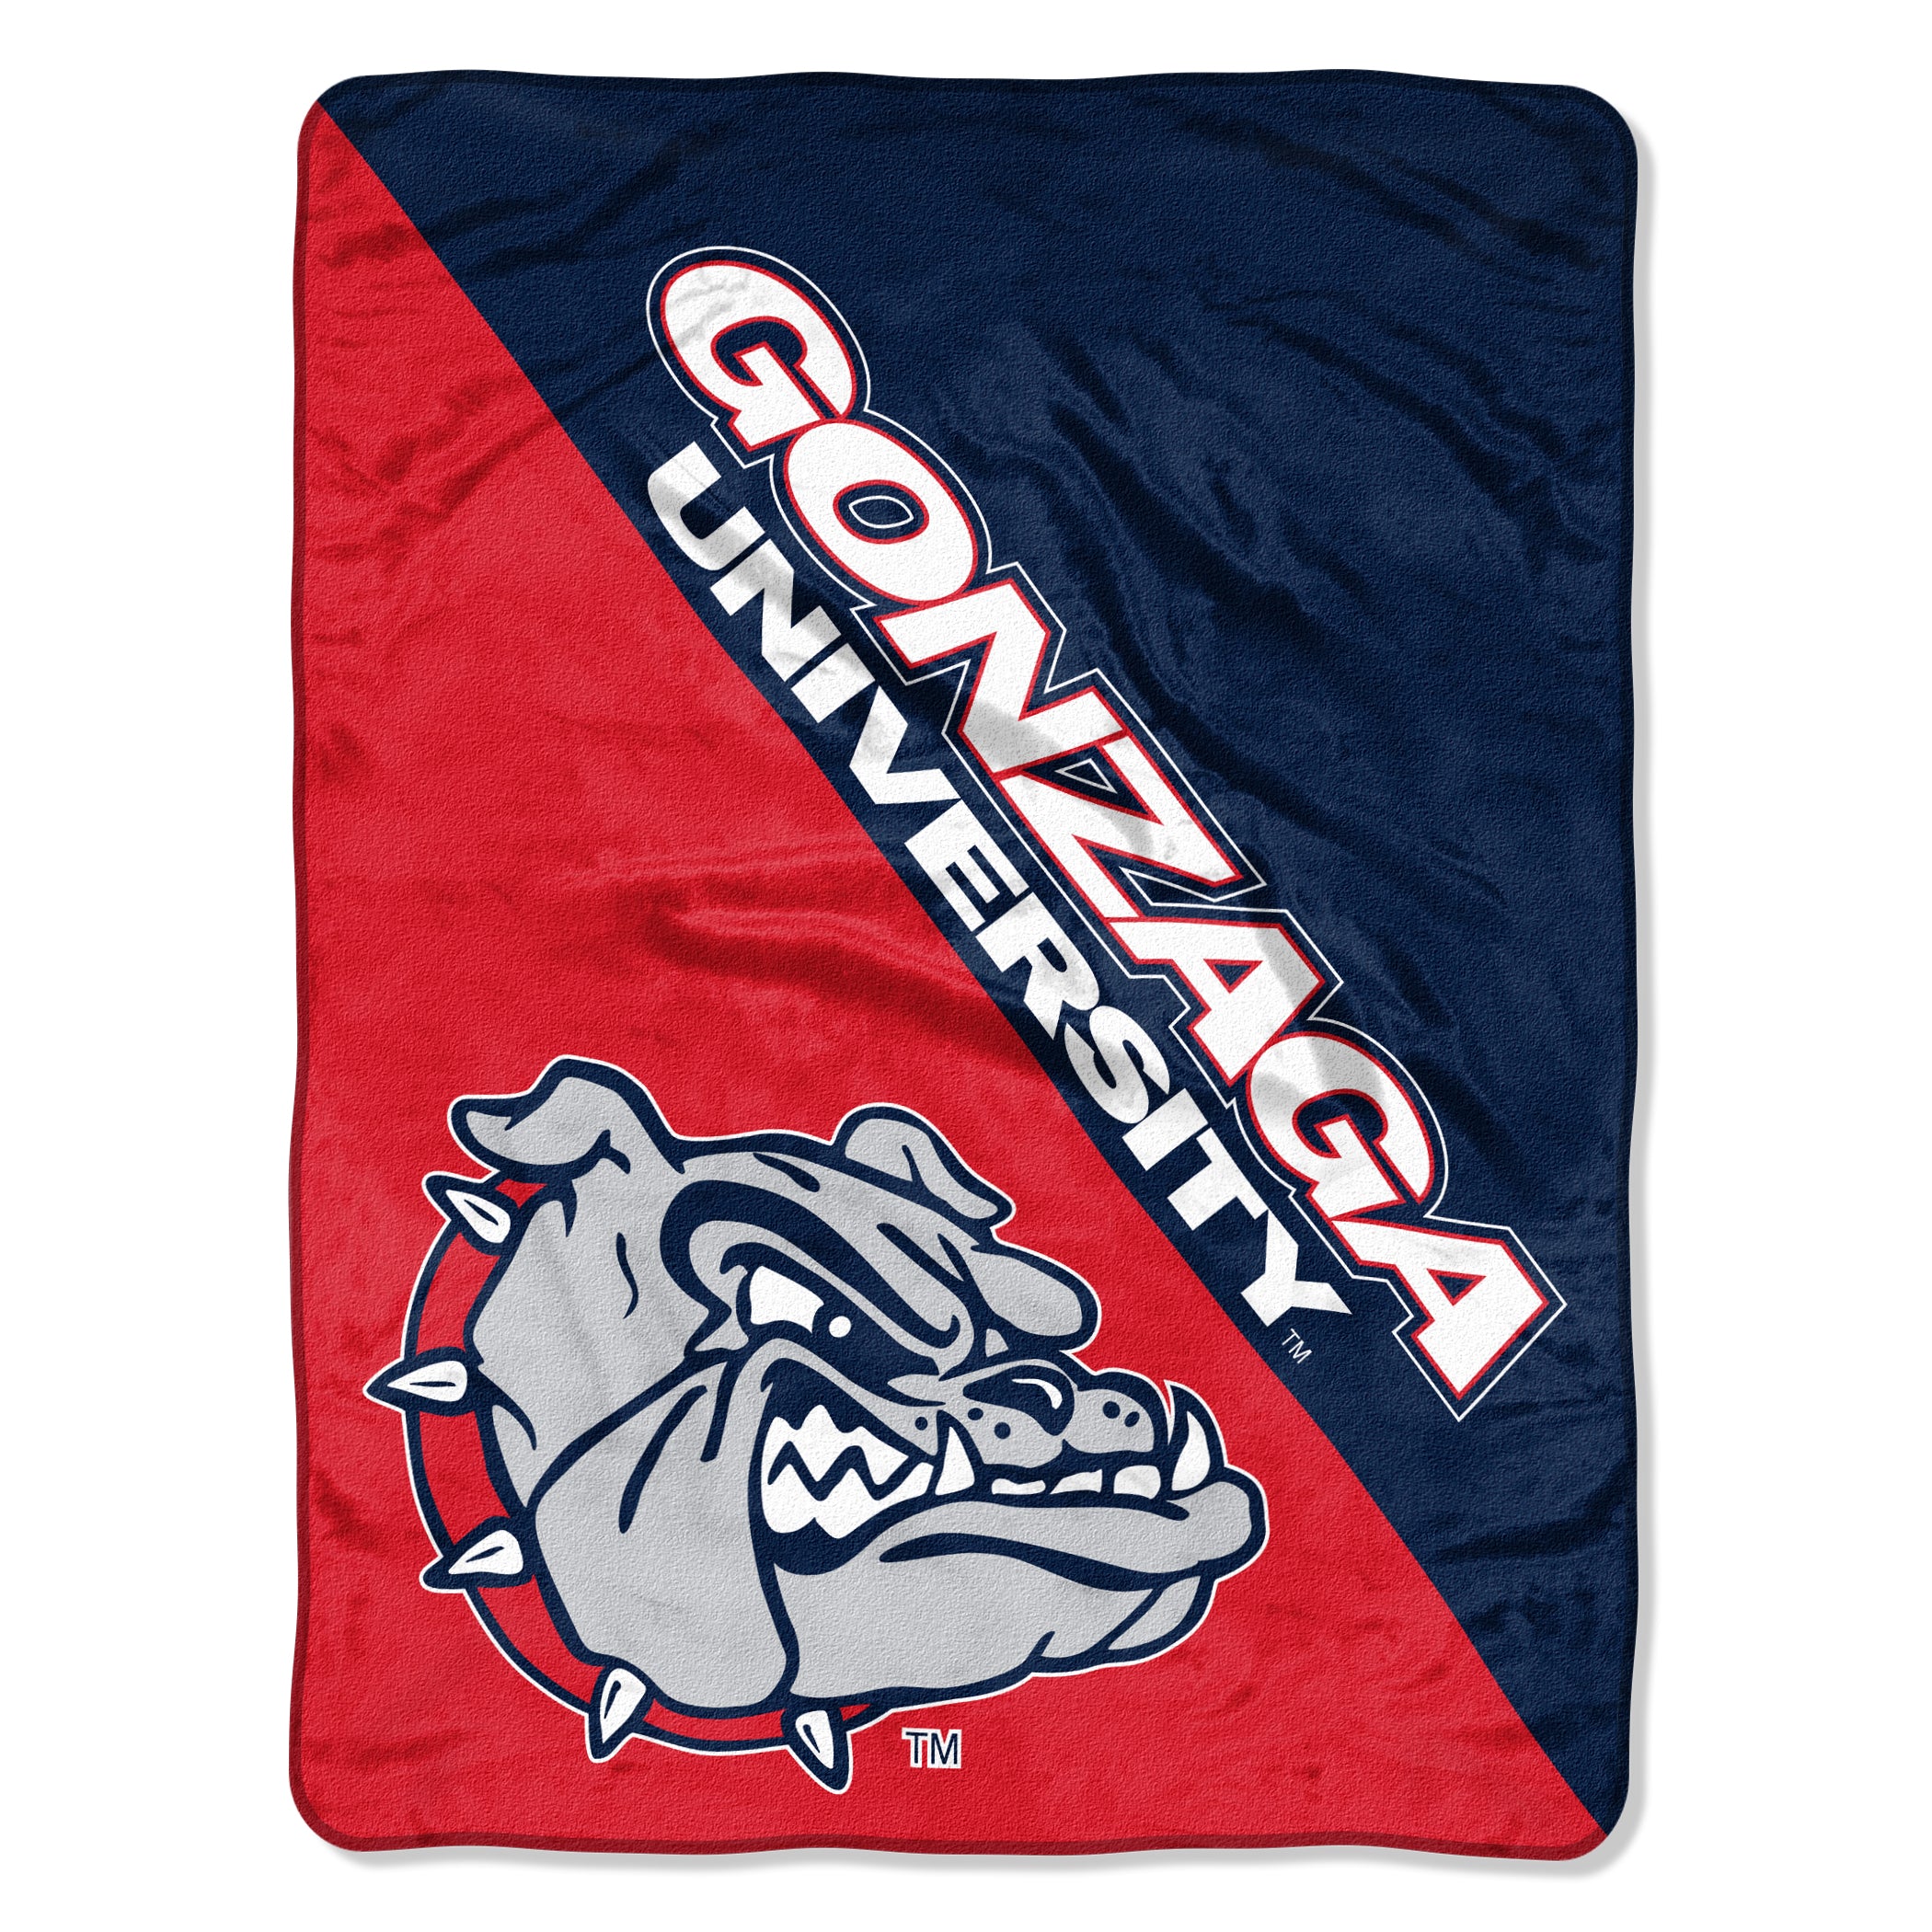 Gonzaga Bulldogs Blanket 46x60 Micro Raschel Halftone Design Rolled - Special Order